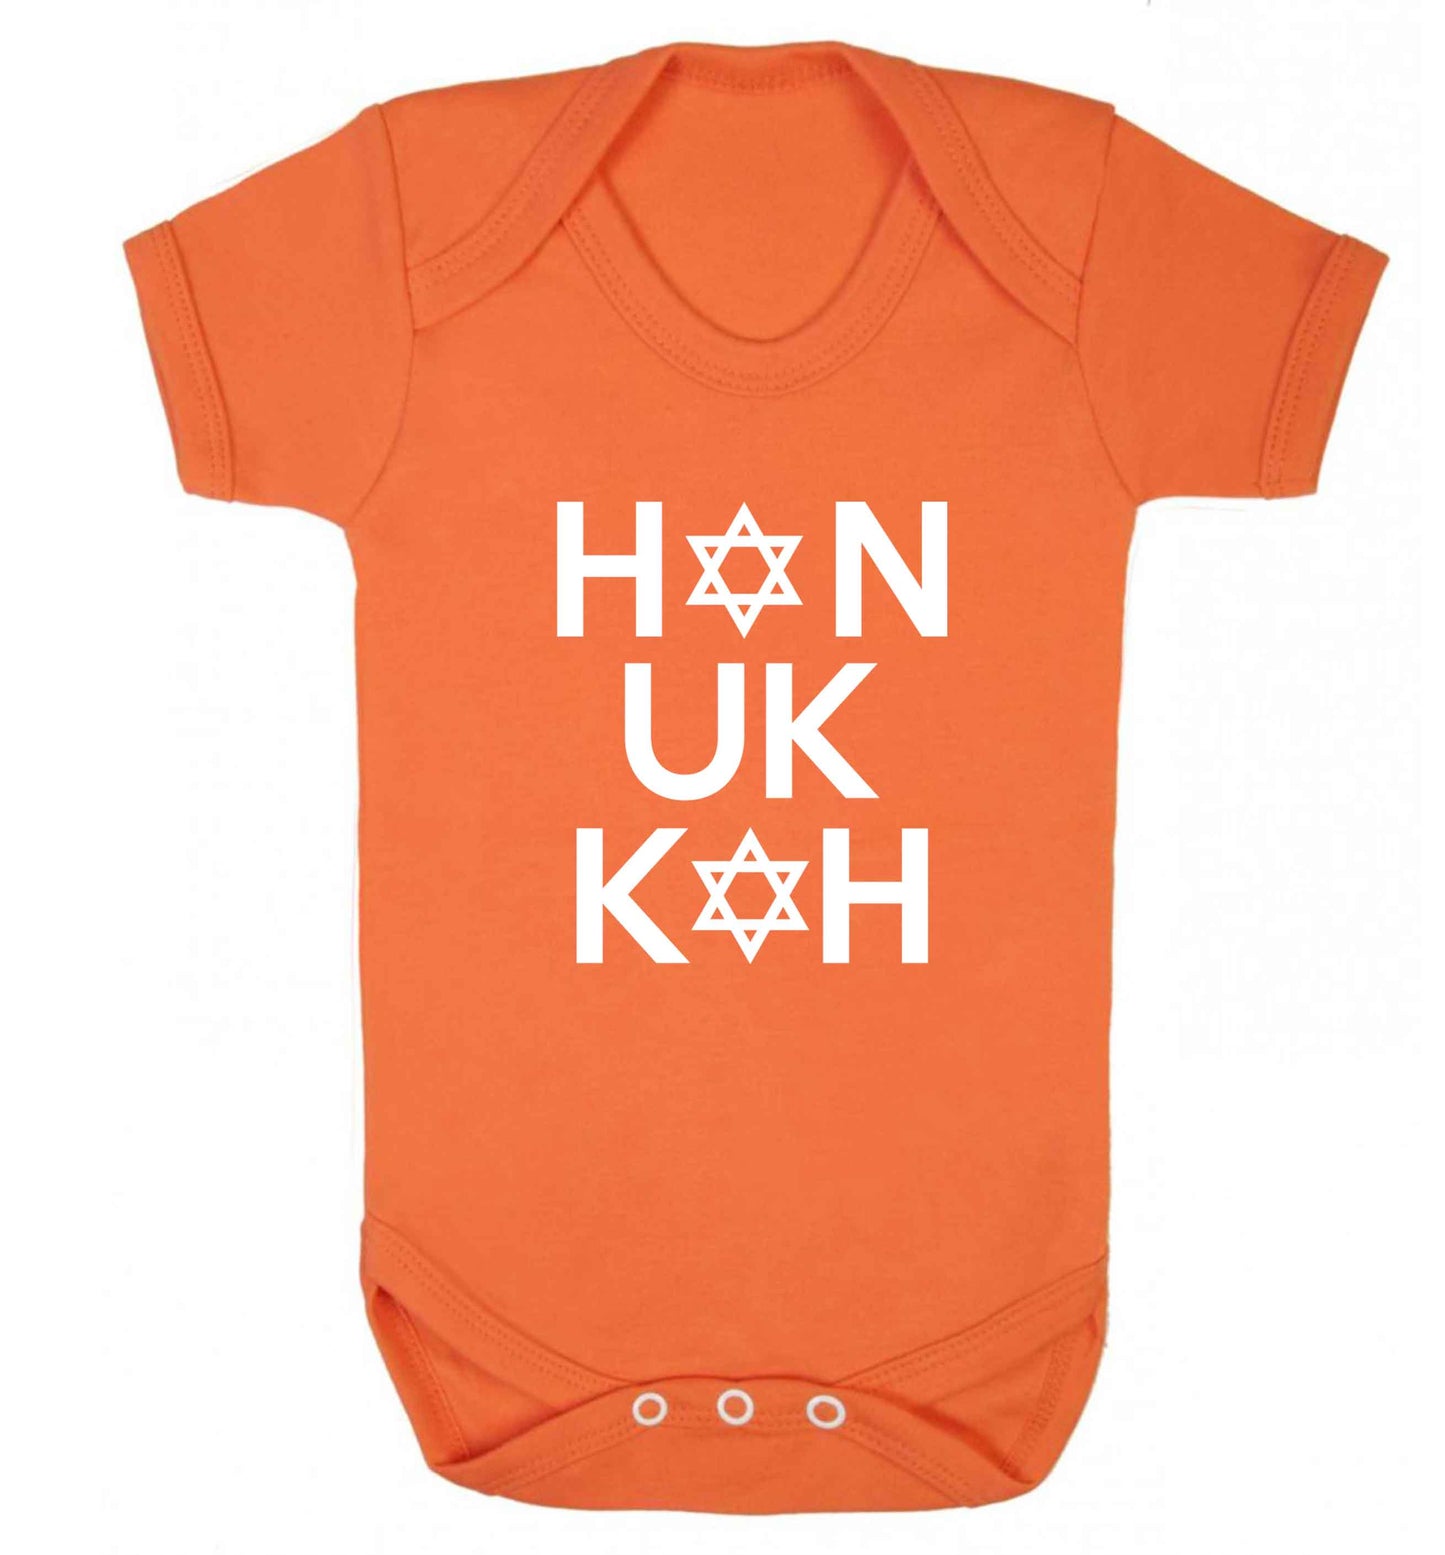 Han uk kah  Hanukkah star of david baby vest orange 18-24 months